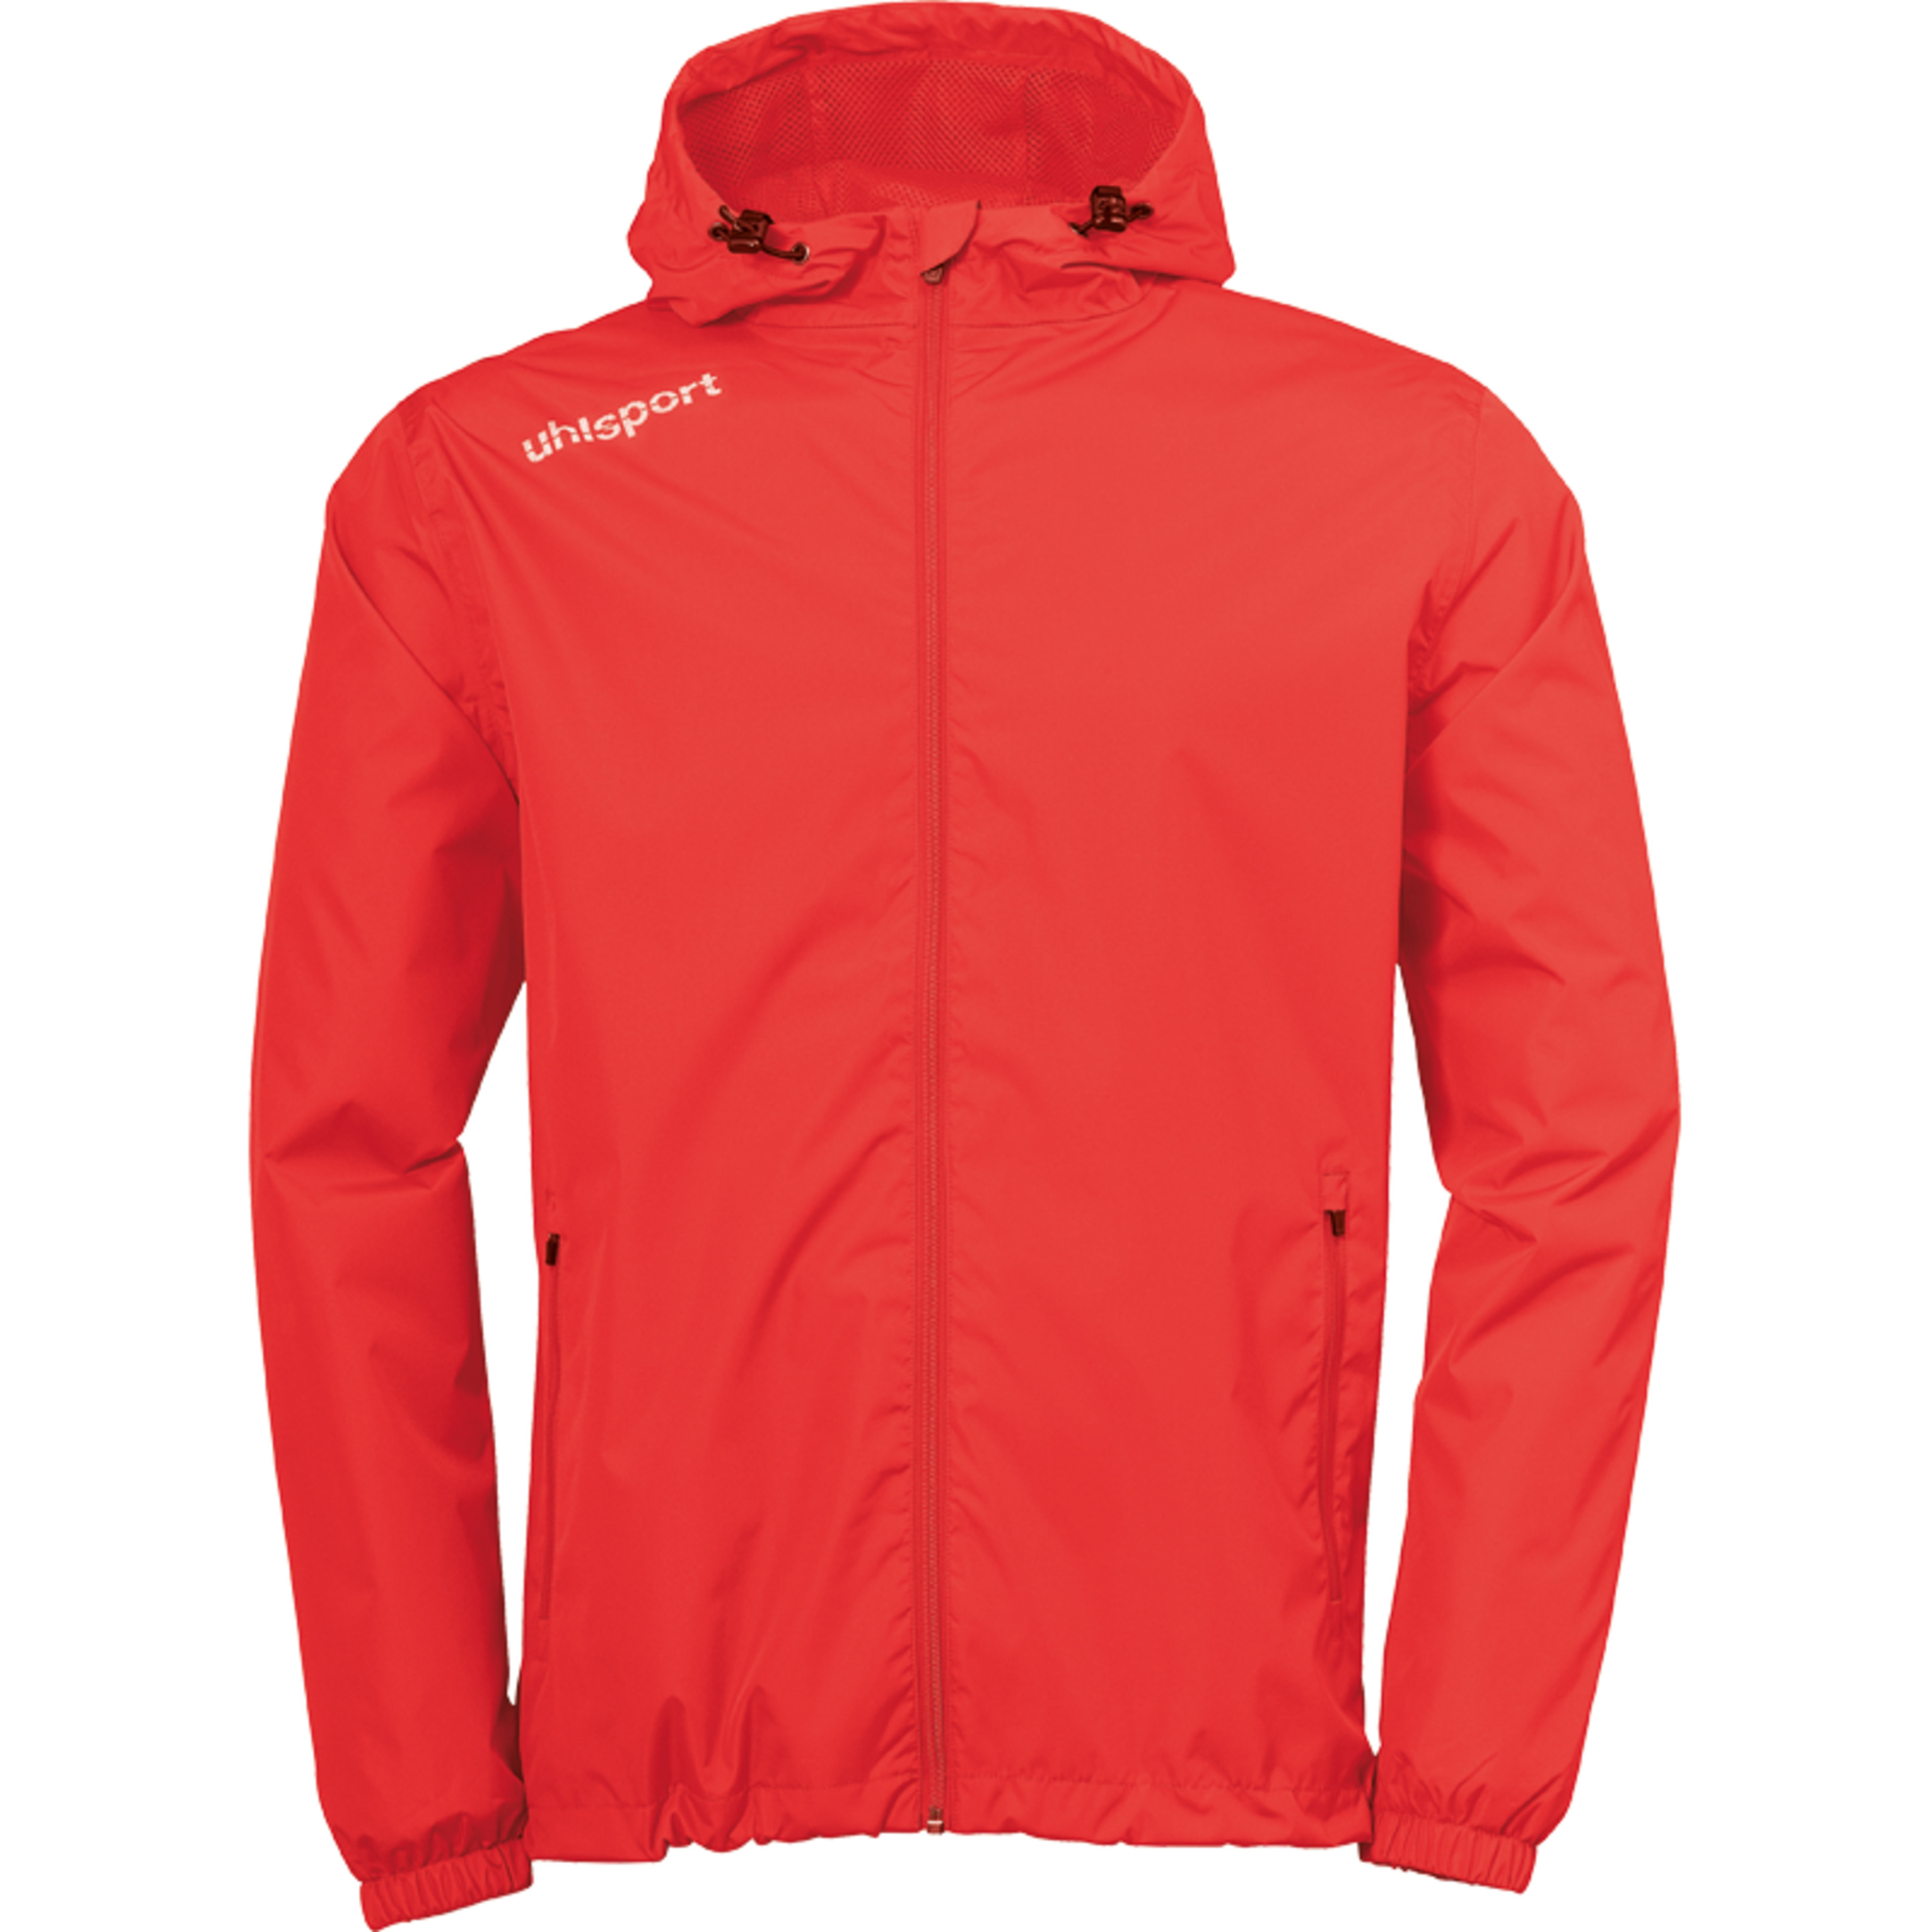 Essential Rain Jacket Rojo/blanco Uhlsport - blanco-rojo - 